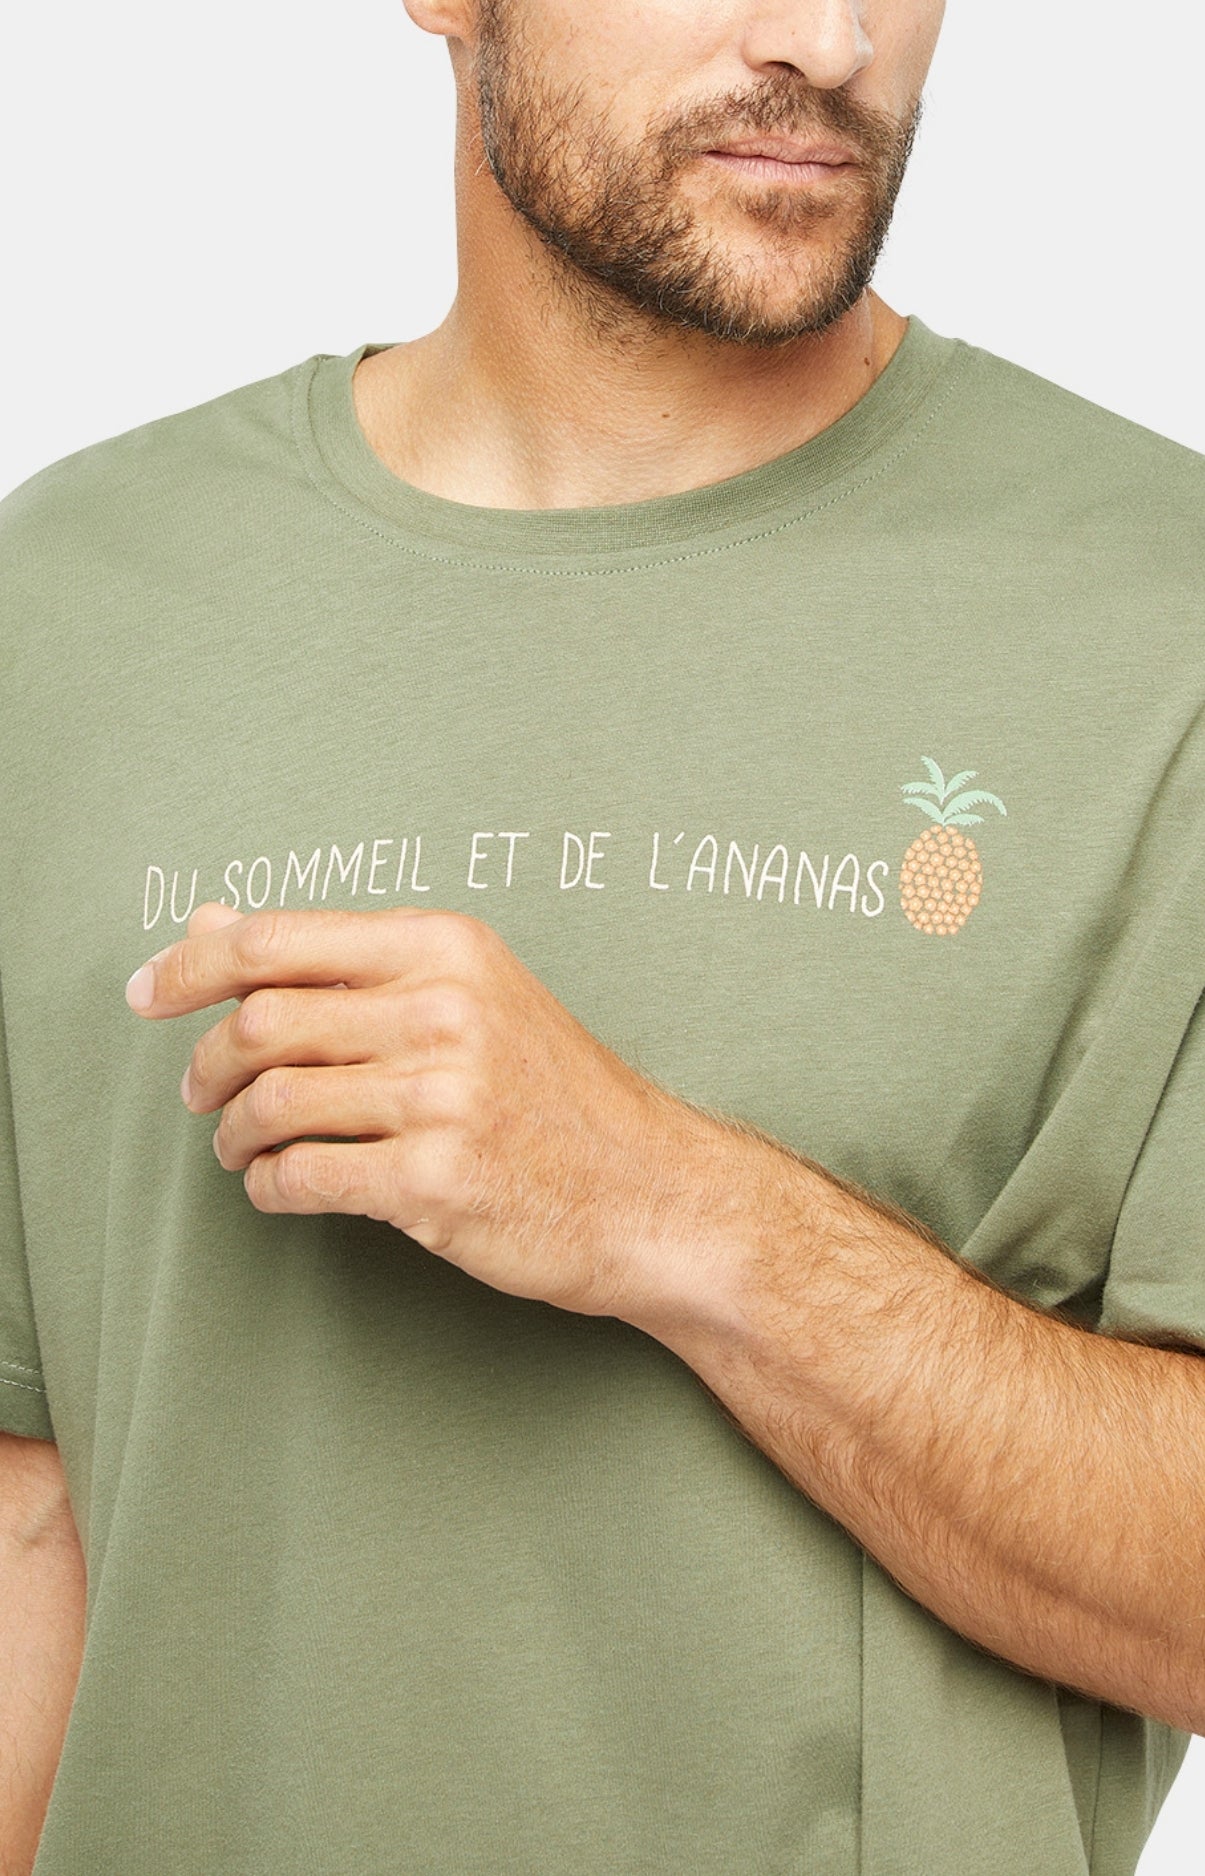 Maxi Tee-shirt - Ananas